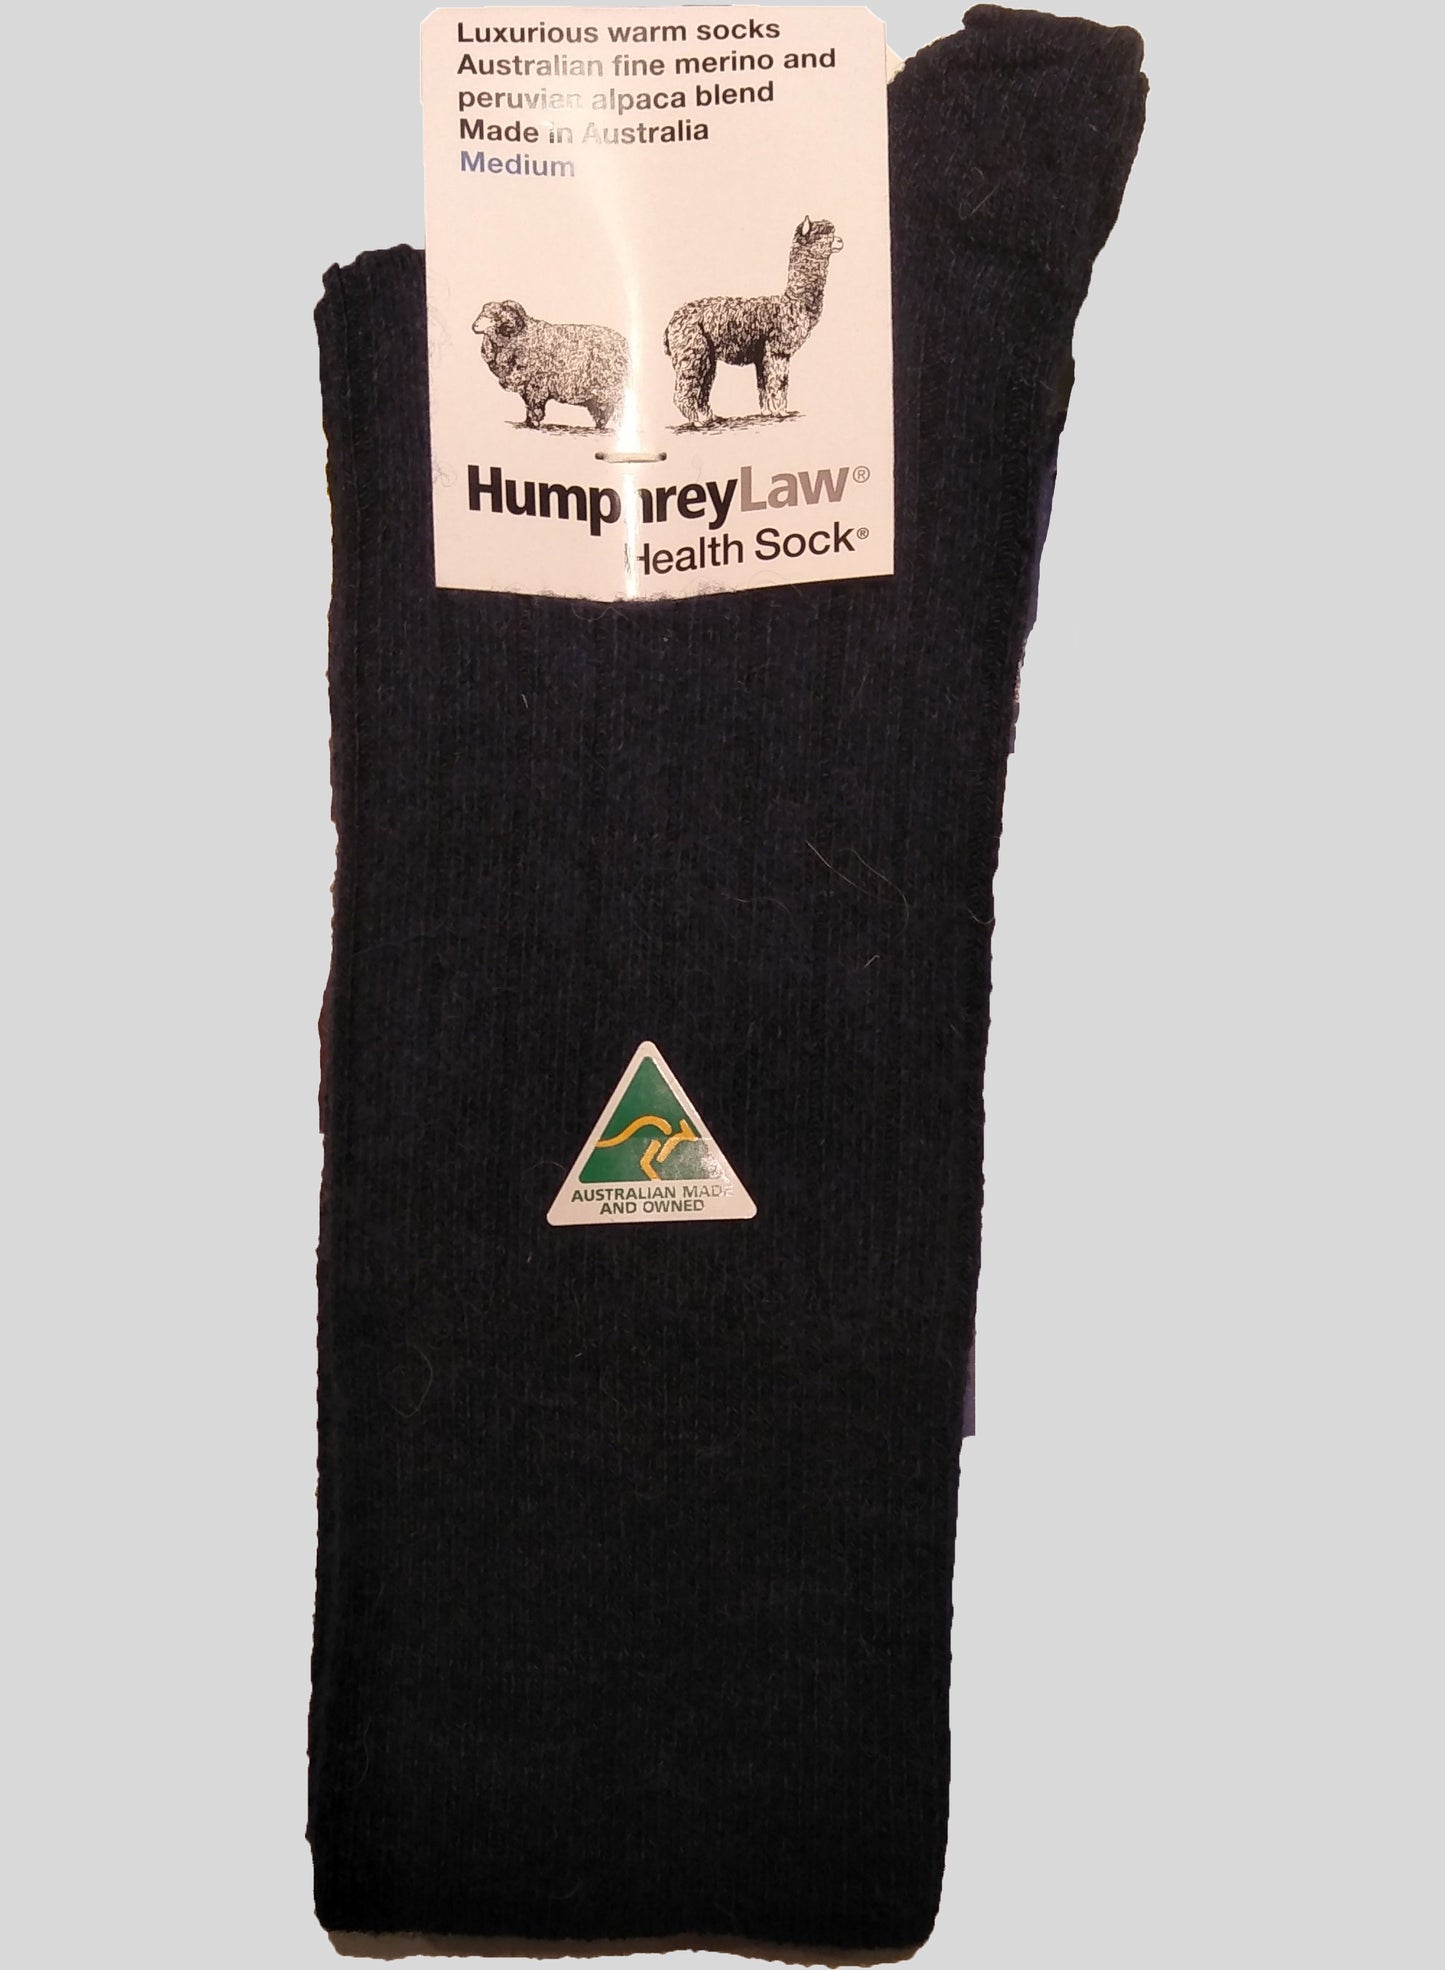 Alpaca Health Socks Large Size 10-13 UK